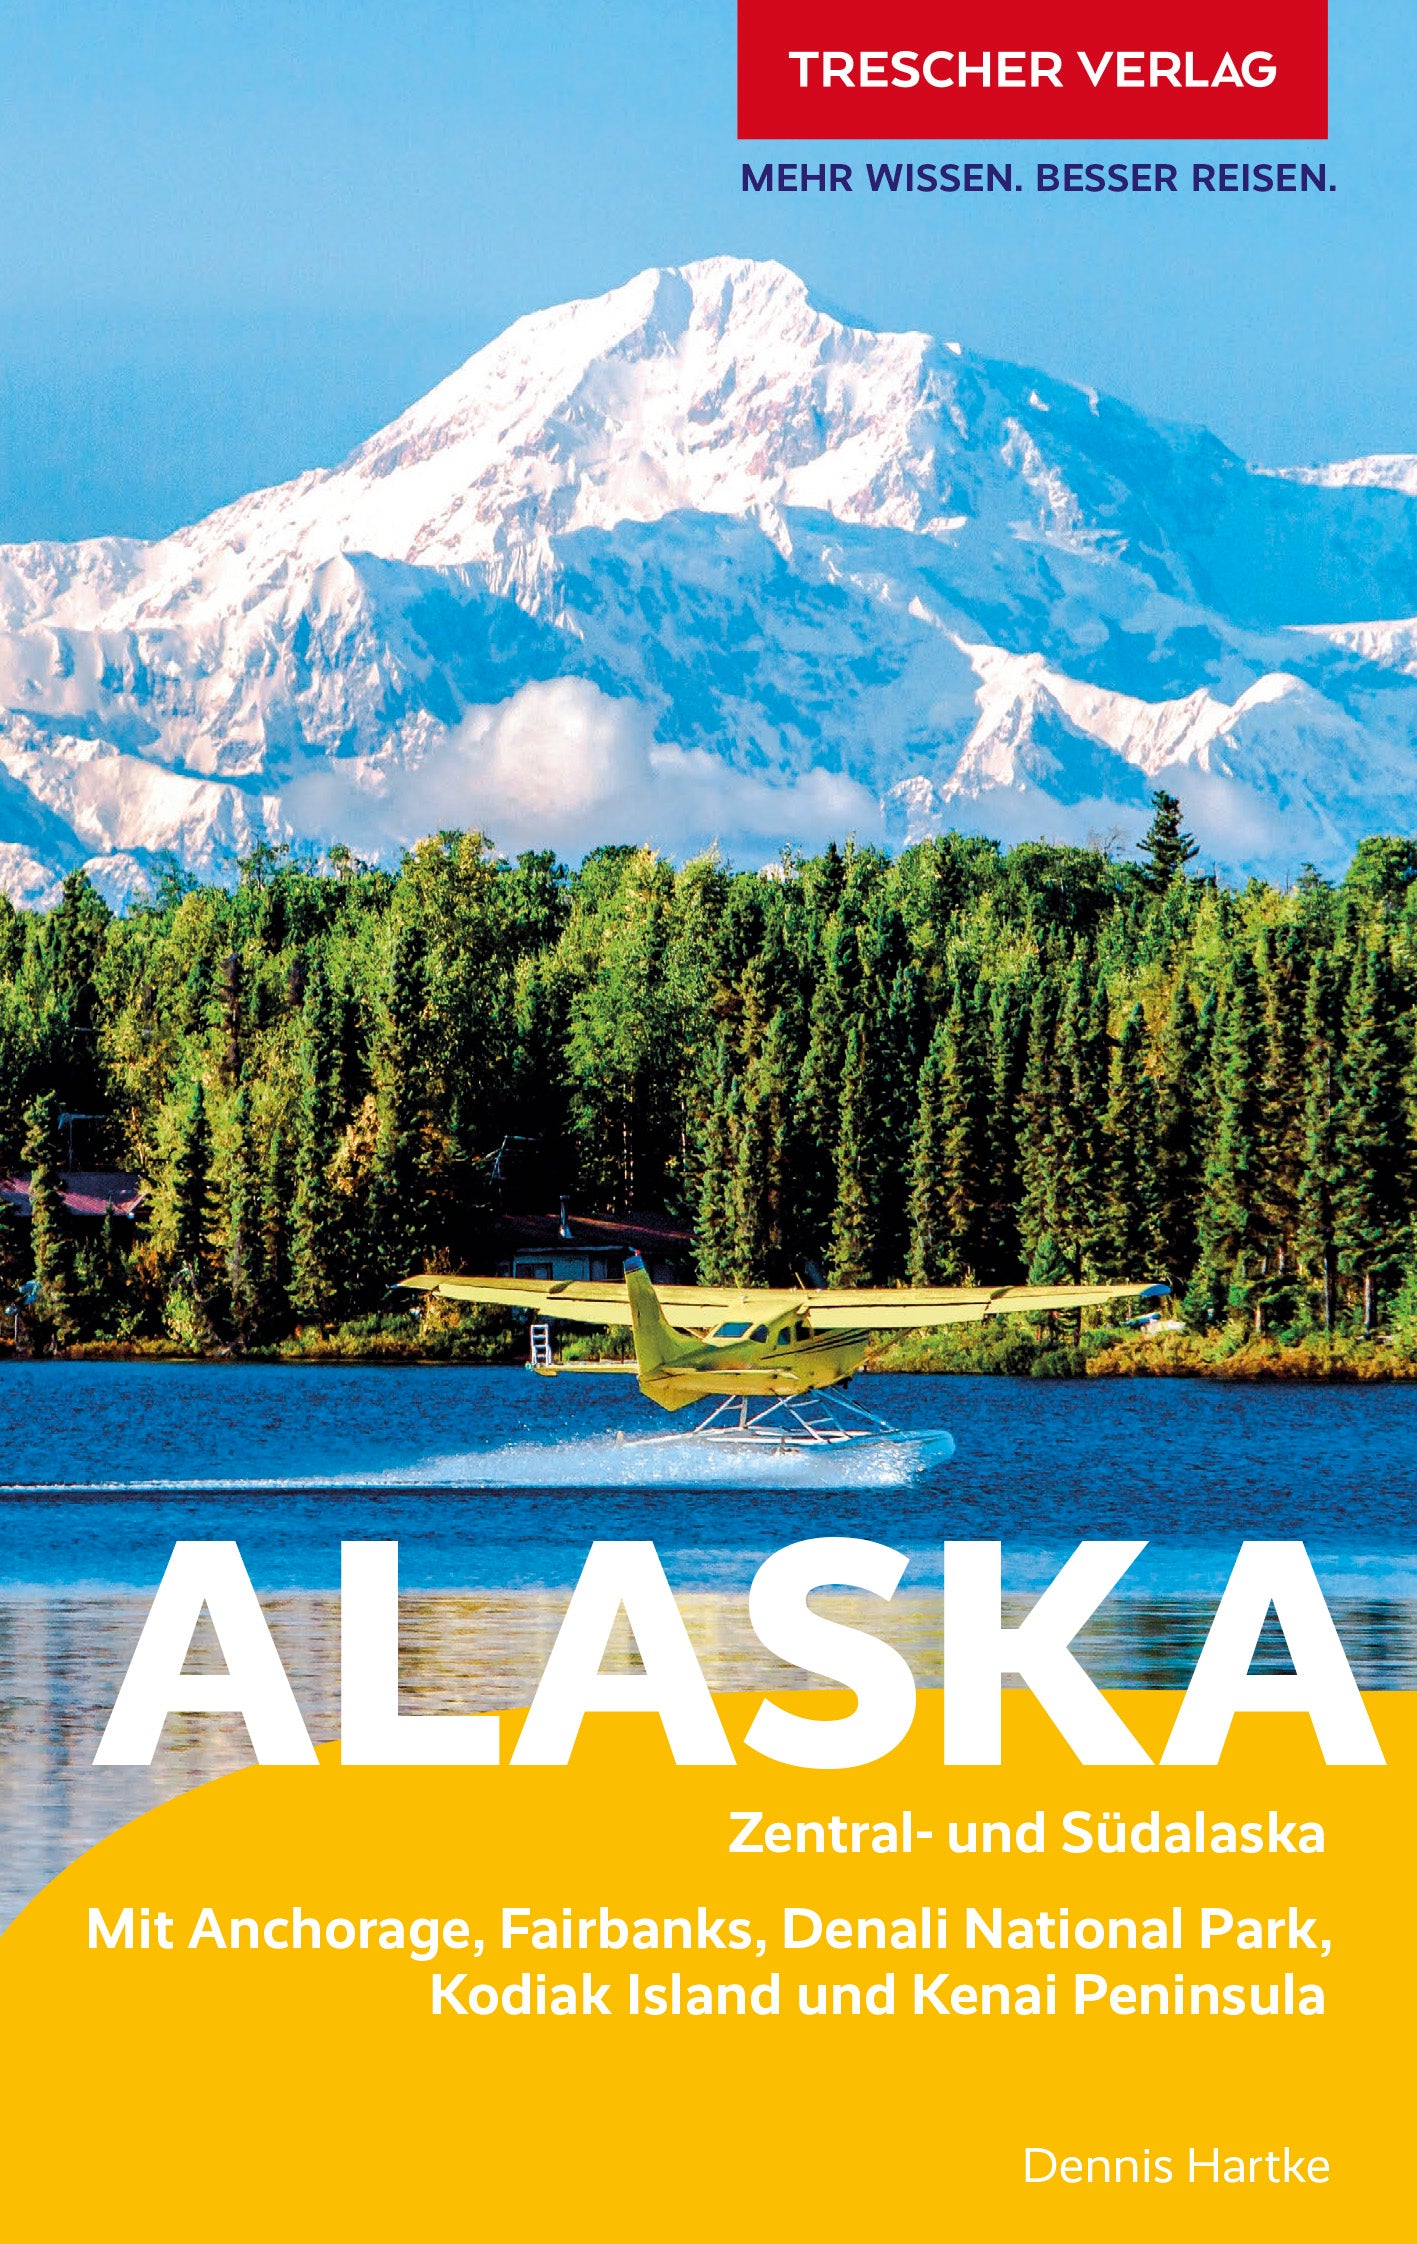 Alaska  Zentral- und Südalaska  - Trescher Verlag